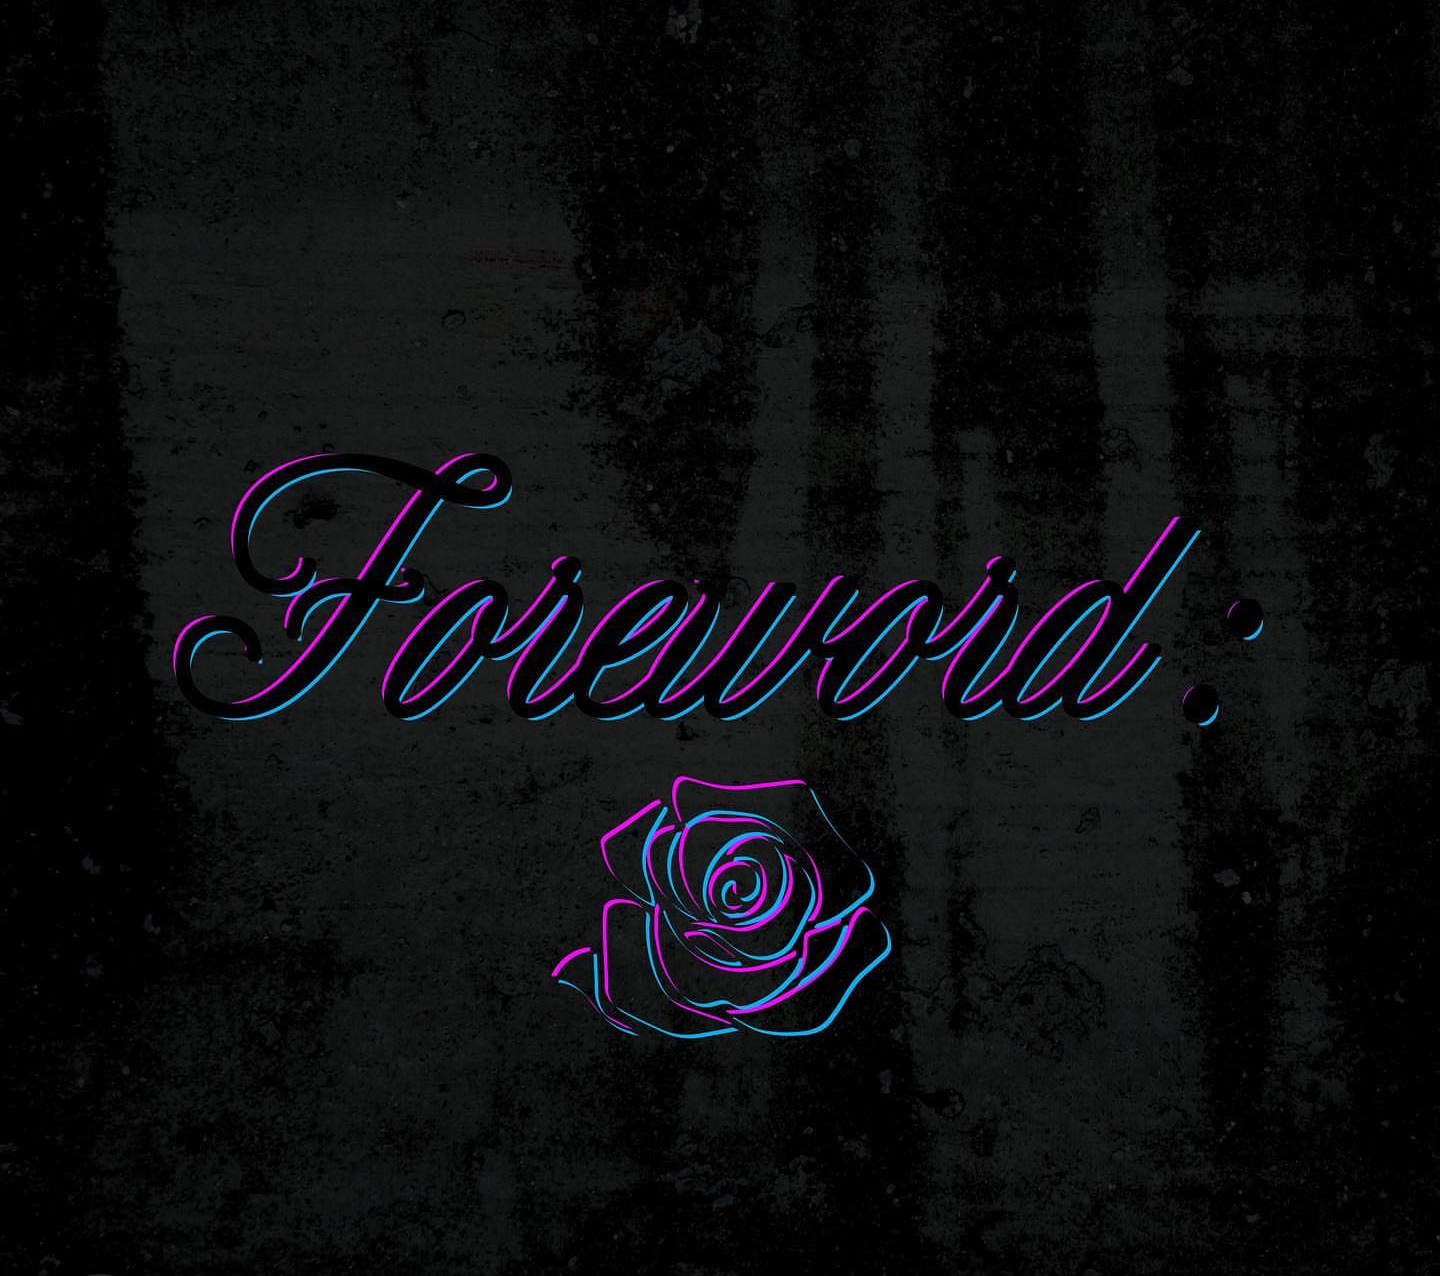 Shawn Stockman Of Boyz II Men Sets Release Date for Solo Album “Forward”